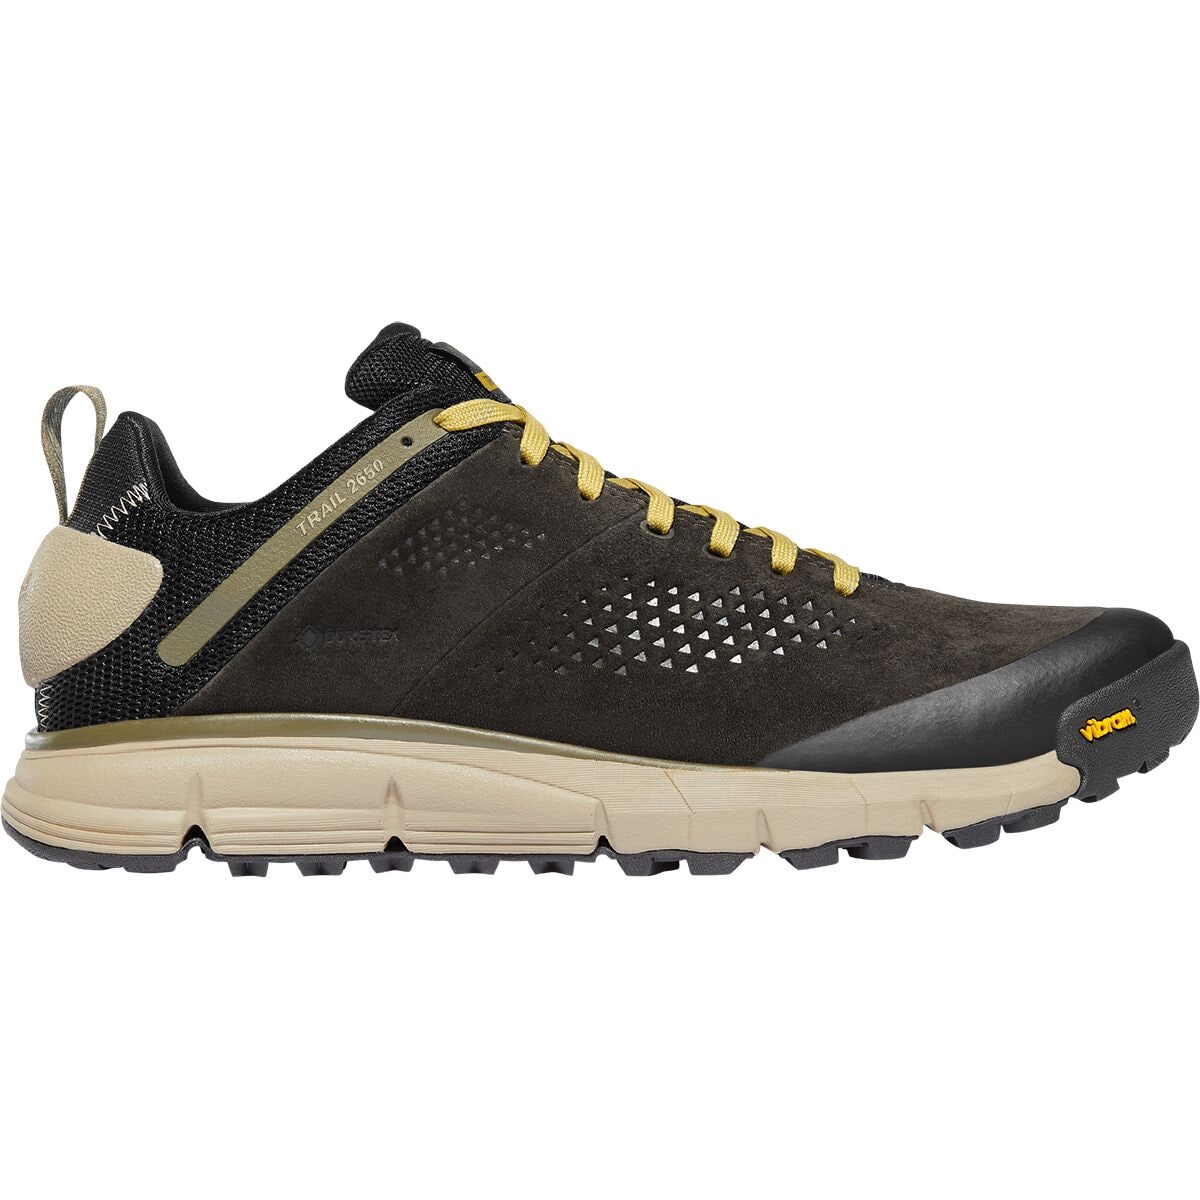 Danner Trail 2650 GTX Wide Hiking Shoe - Men's